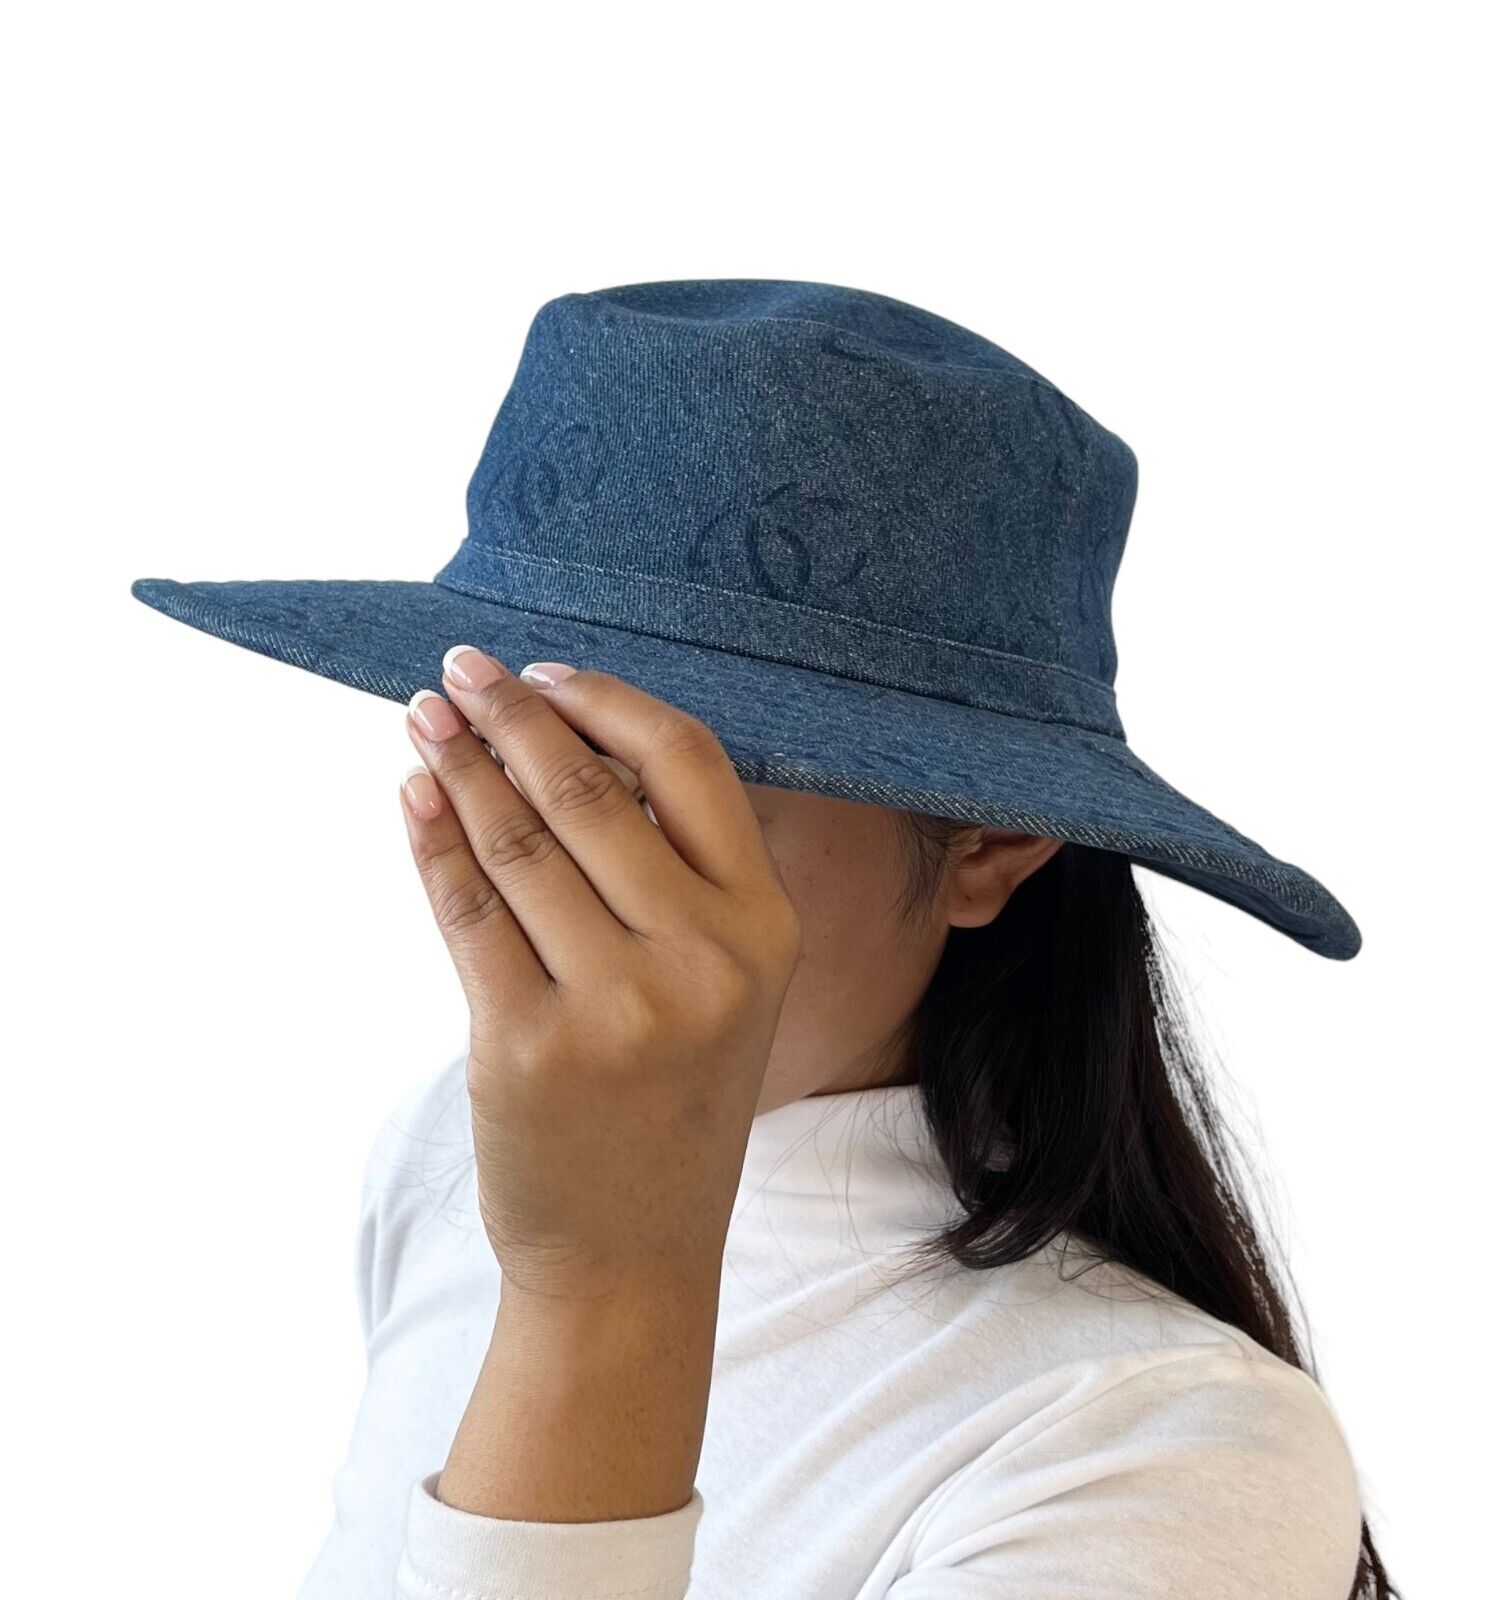 CHANEL Vintage CC Logo Denim Bucket Hat #58 Blue Cotton Accessory Rank AB